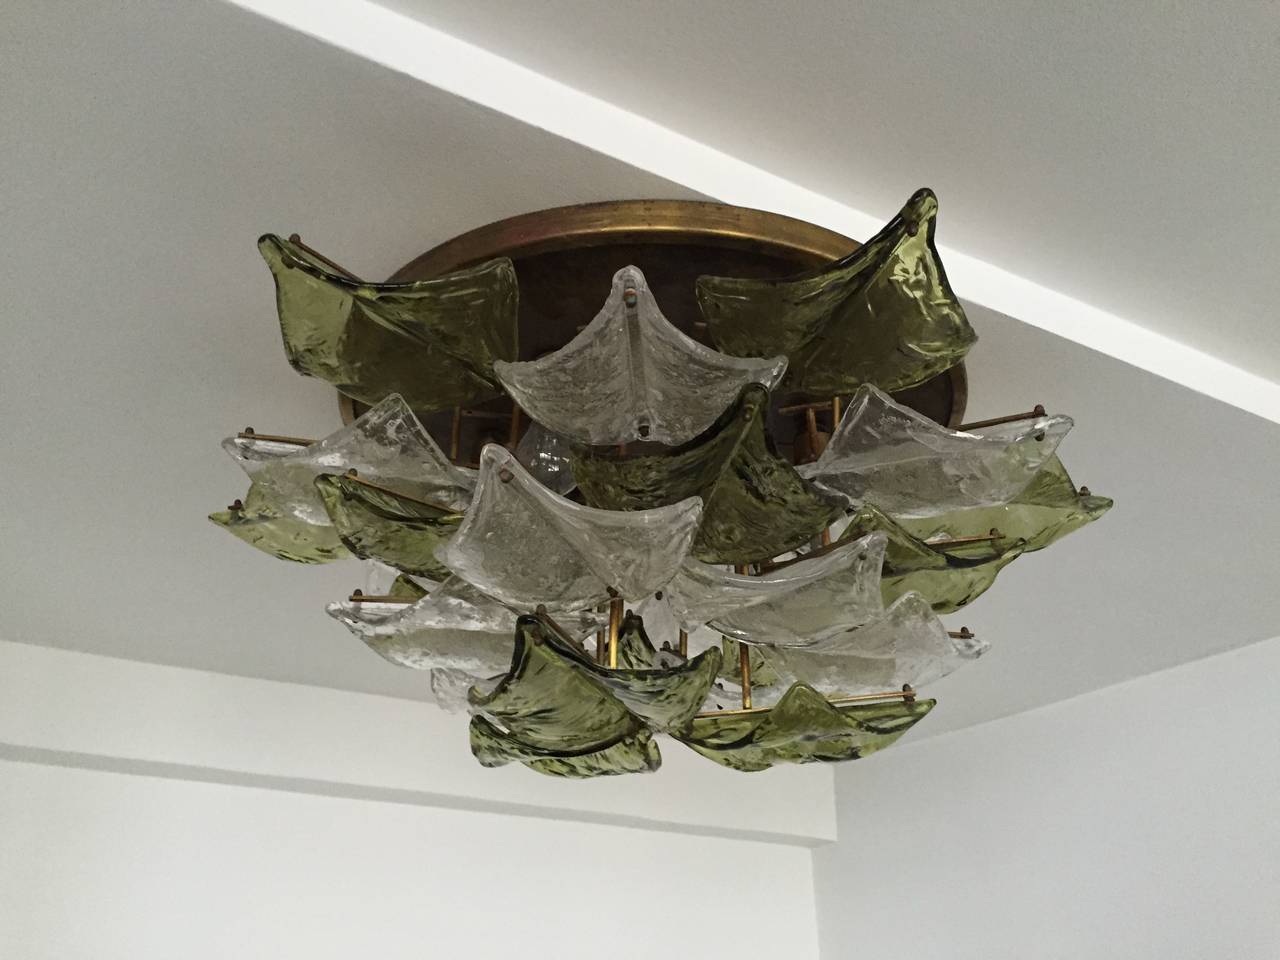 Flush mount chandelier. Brass with Murano glass leaf shades, Italian, circa 1960s.